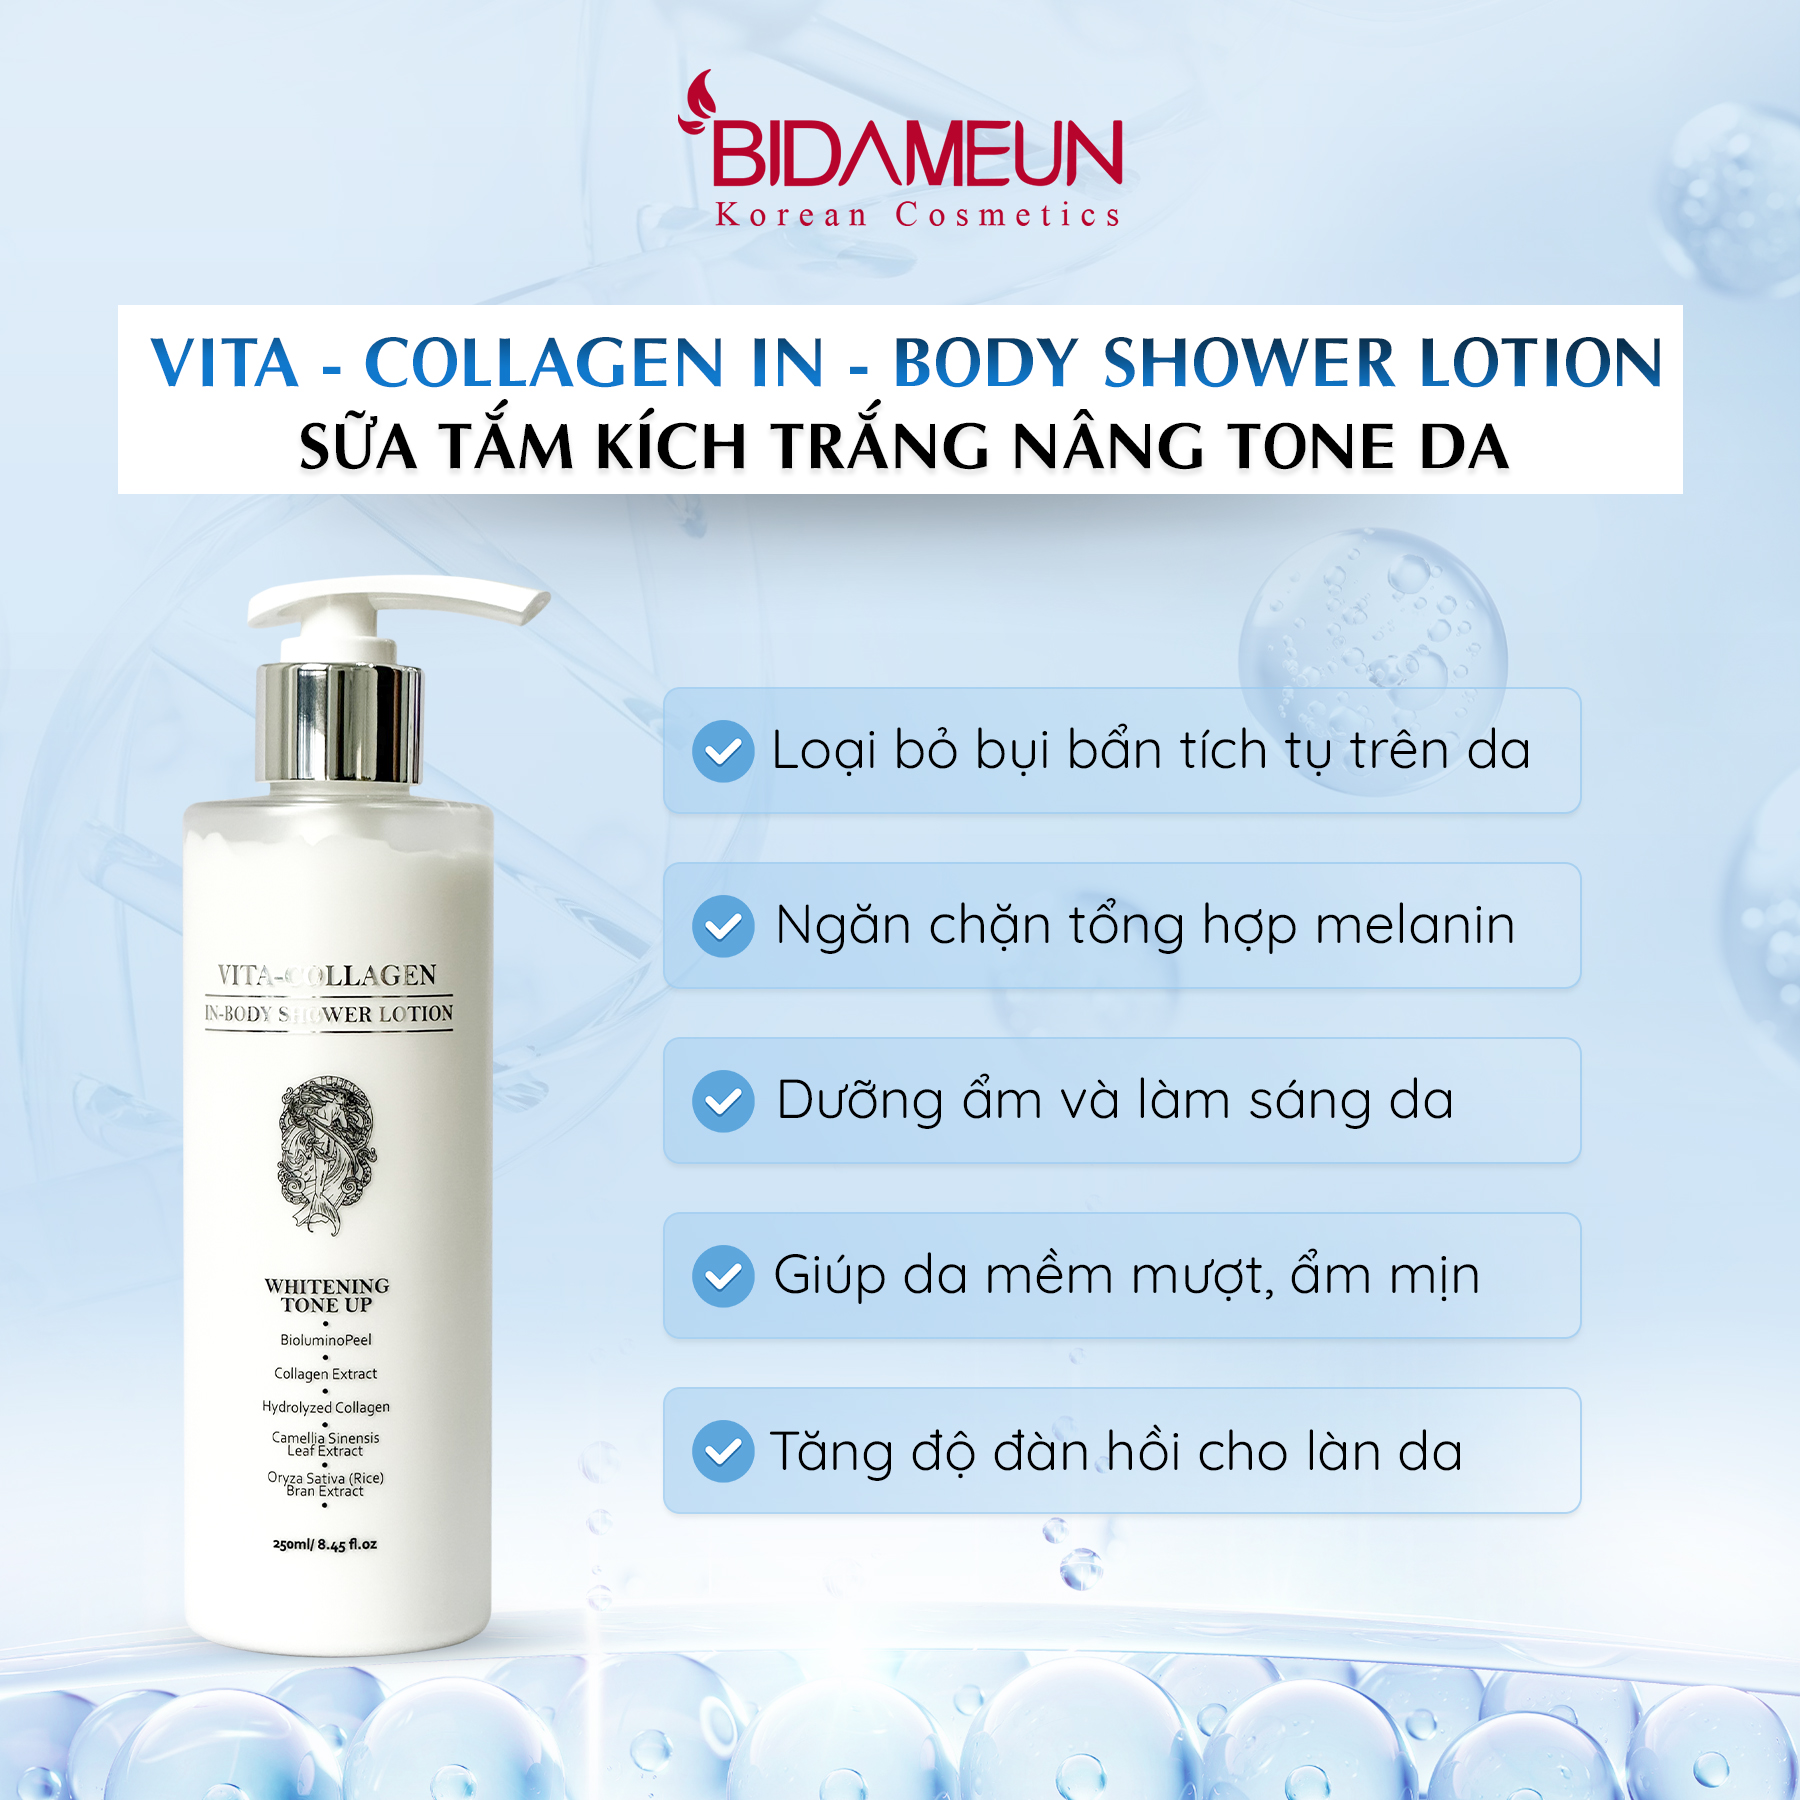 Bidameun Vita - Collagen In Body Shower Lotion